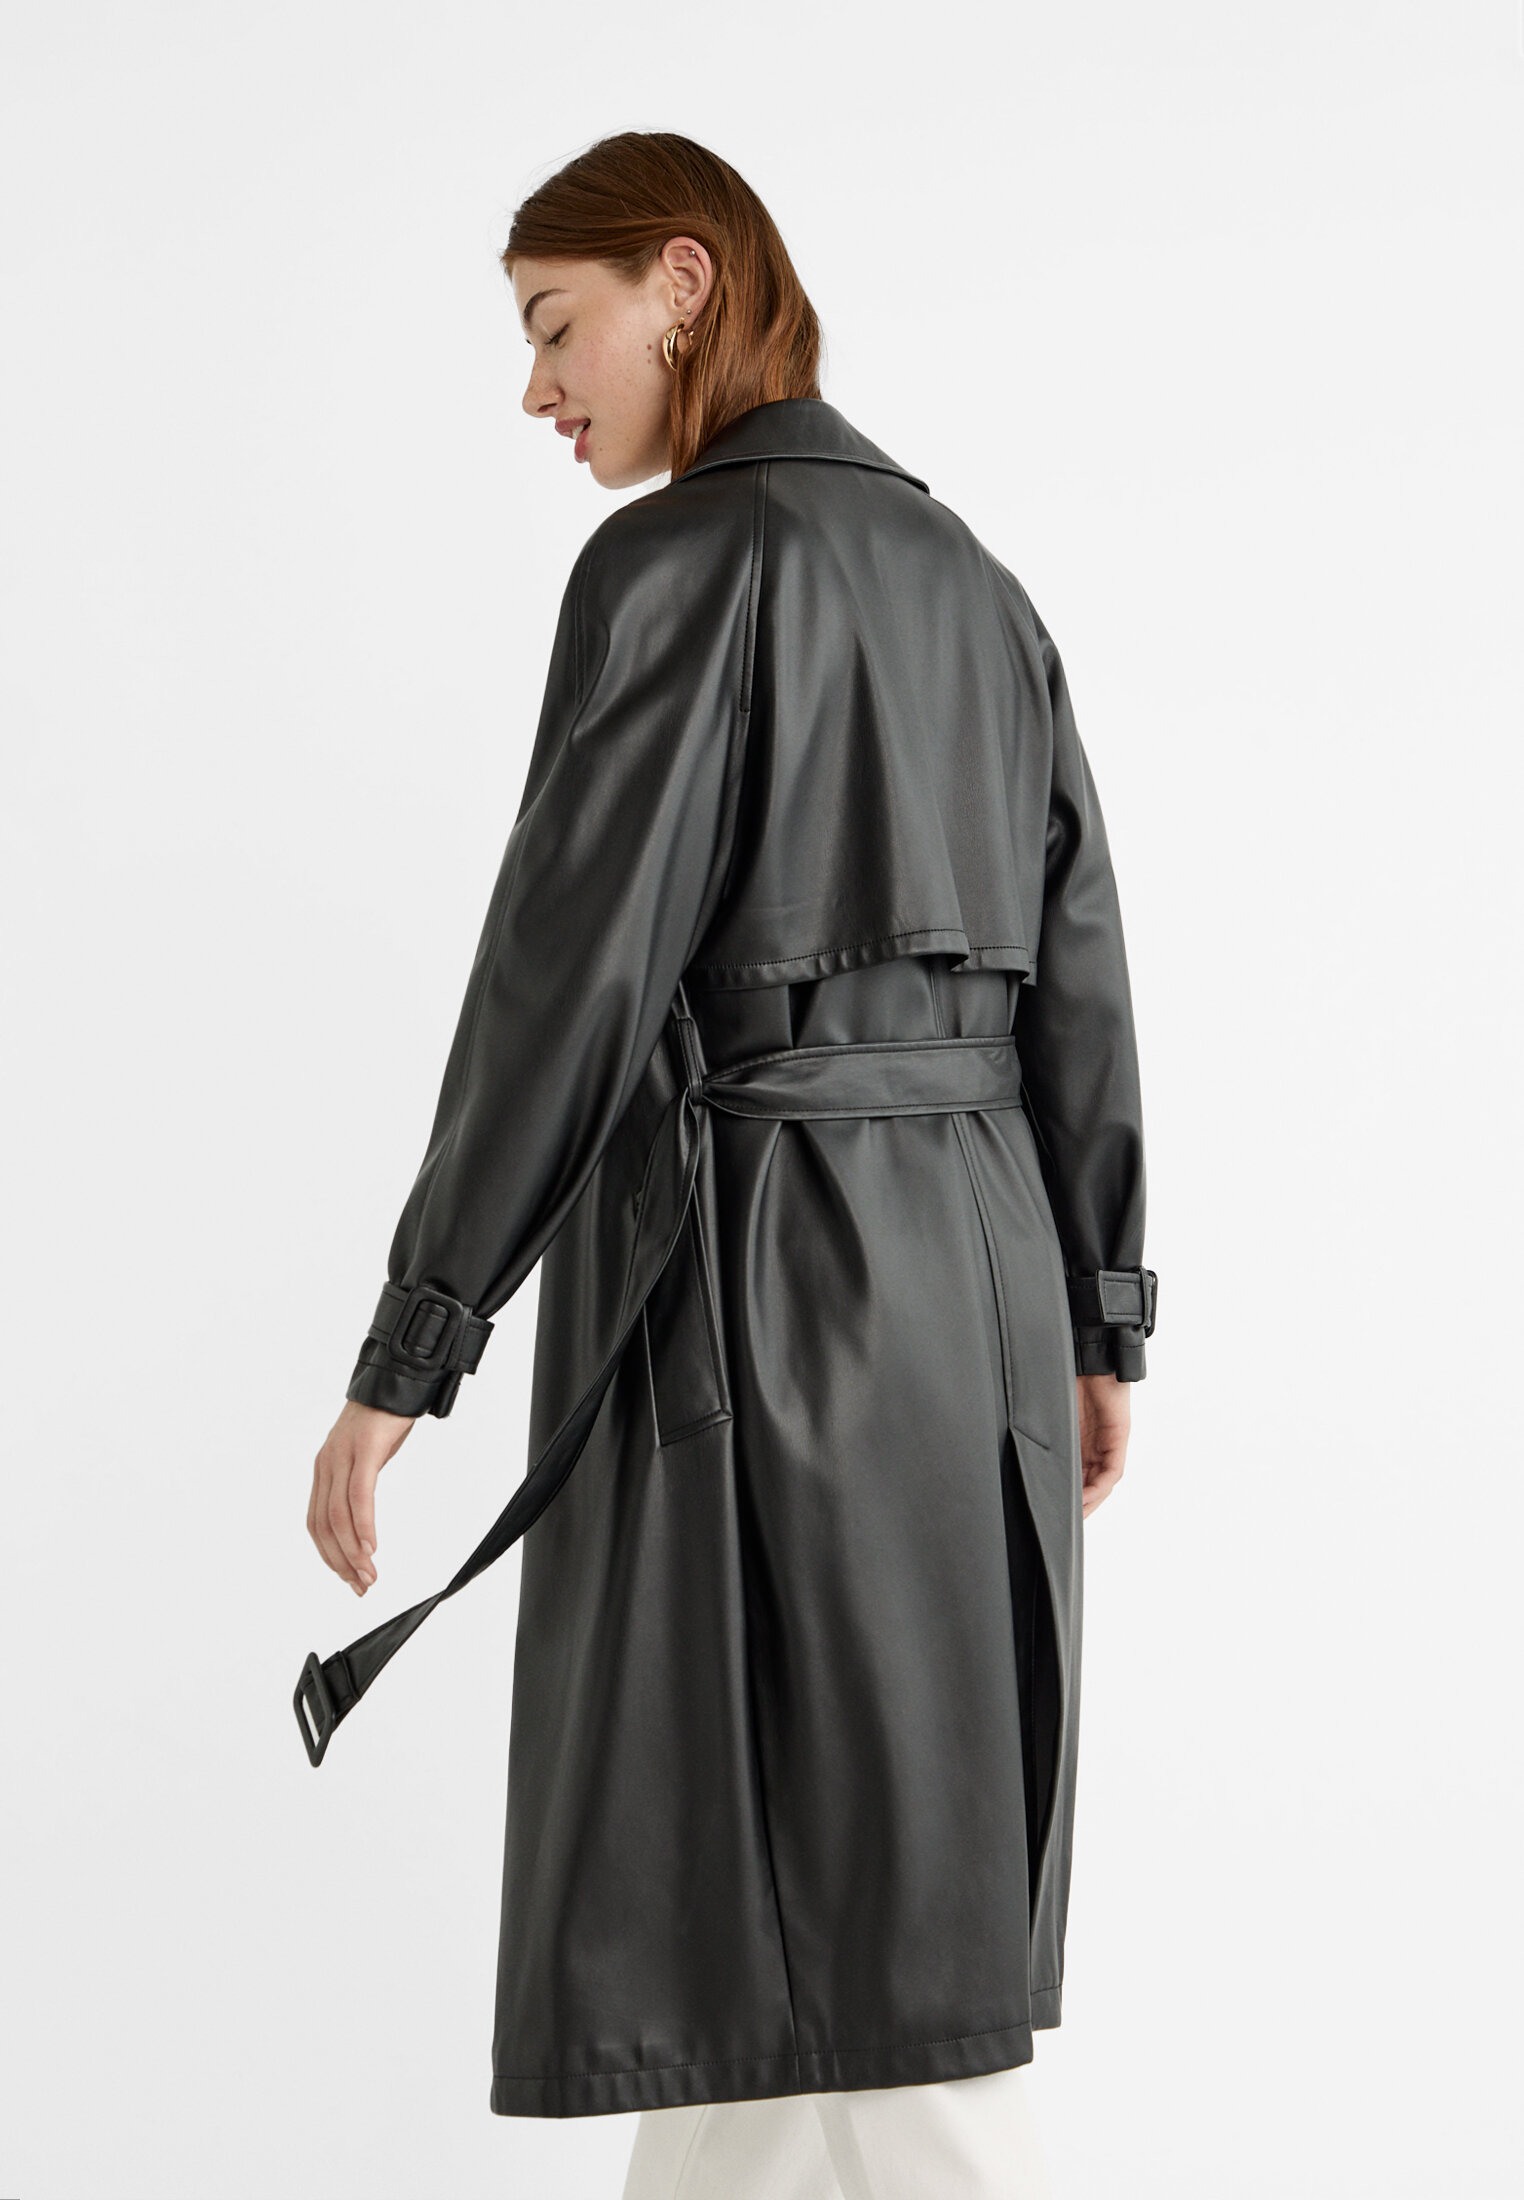 Long faux leather trench coat - Women's fashion | Stradivarius 